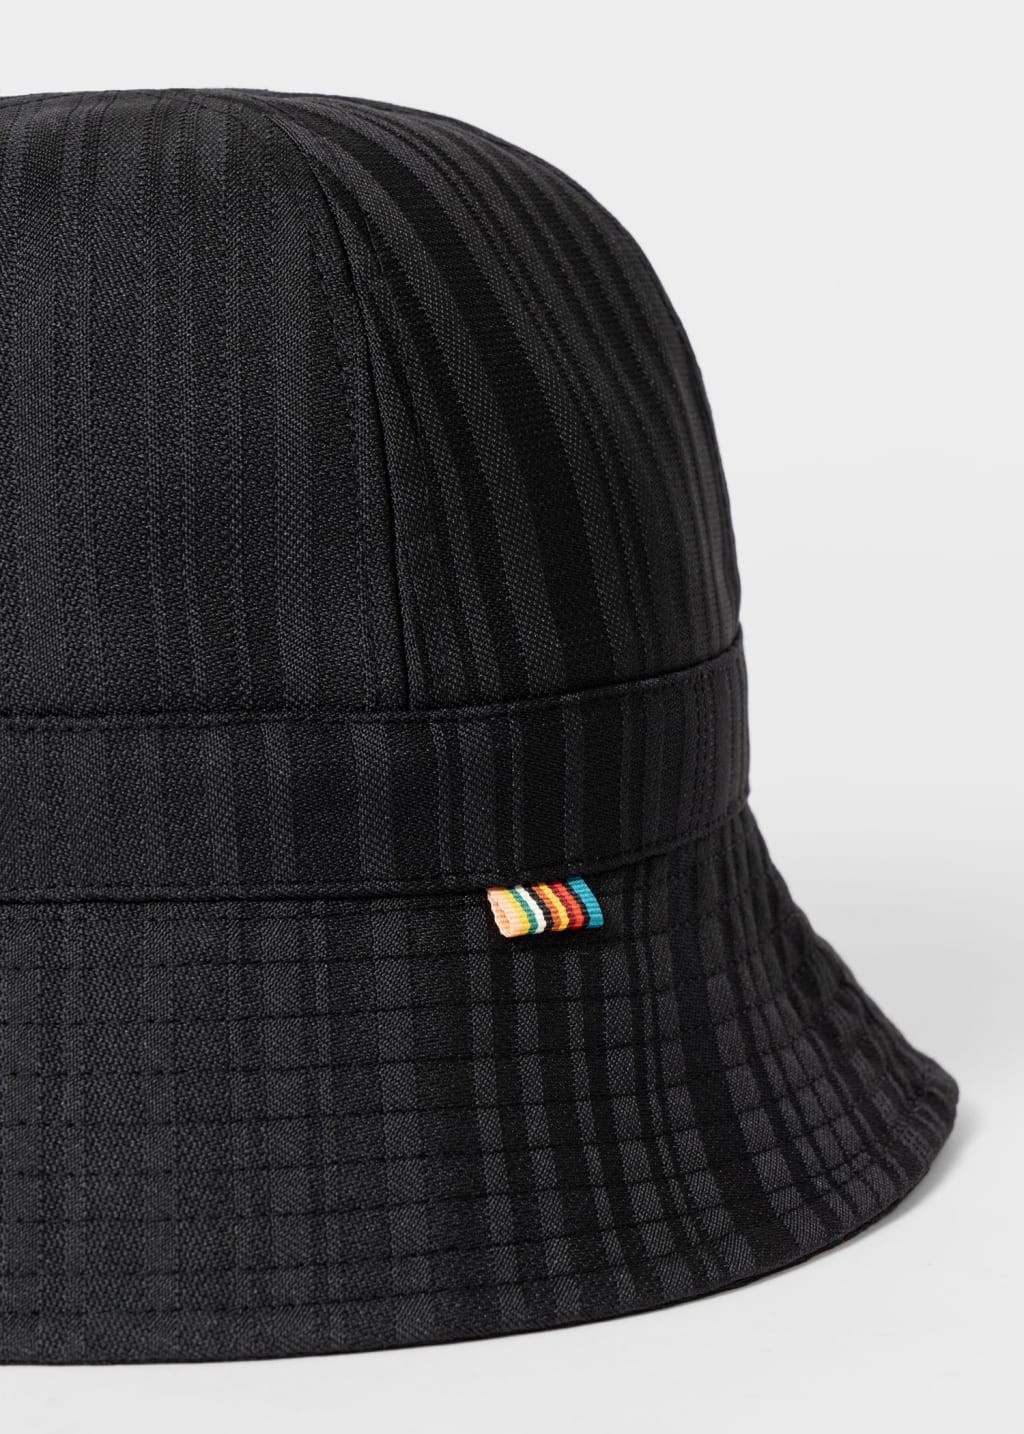 Detail View - Black 'Shadow Stripe' Bucket Hat Paul Smith